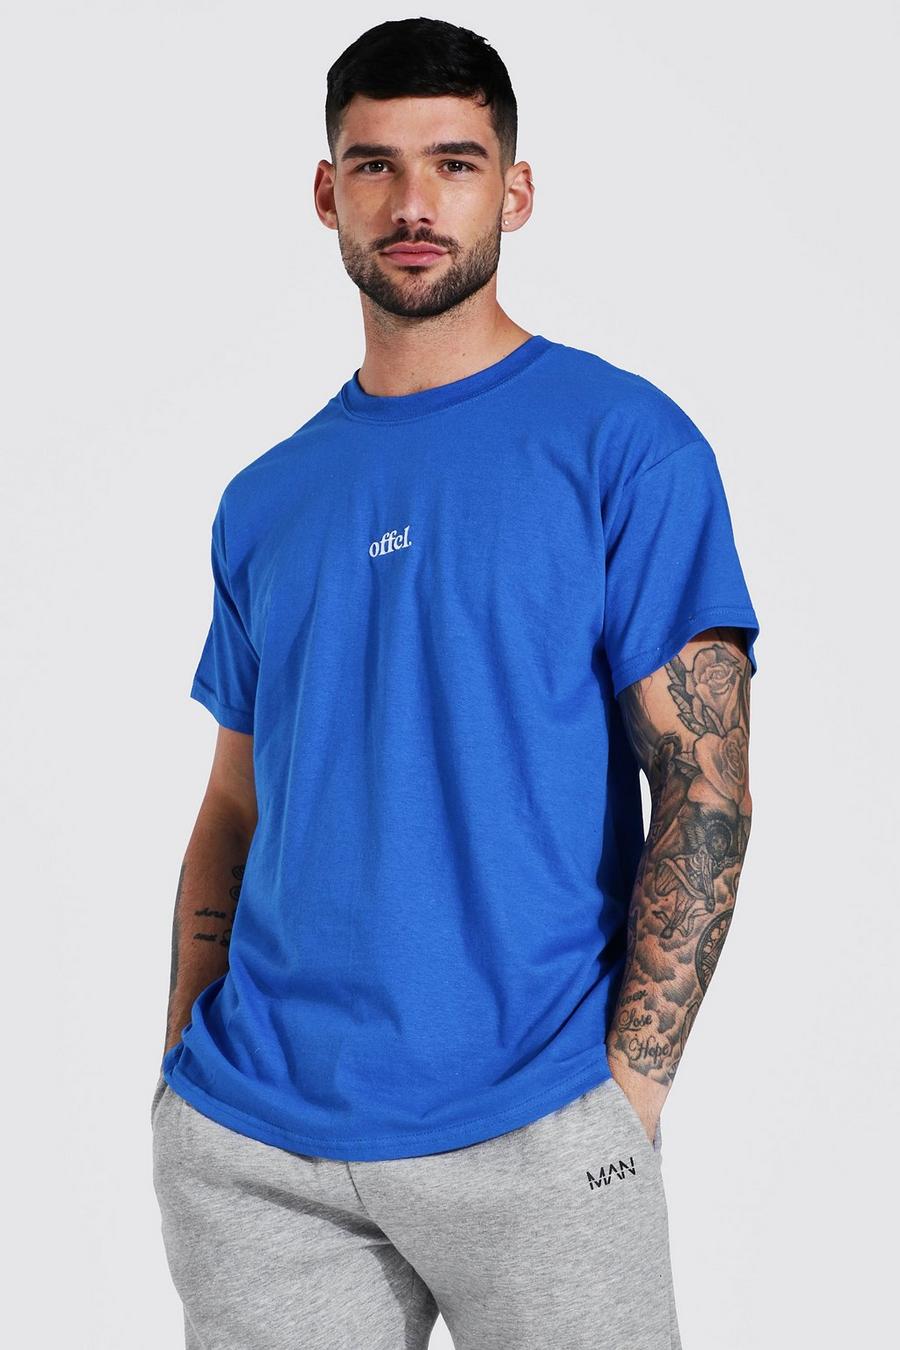 Cobalt blue Offcl Embroidered T-shirt image number 1